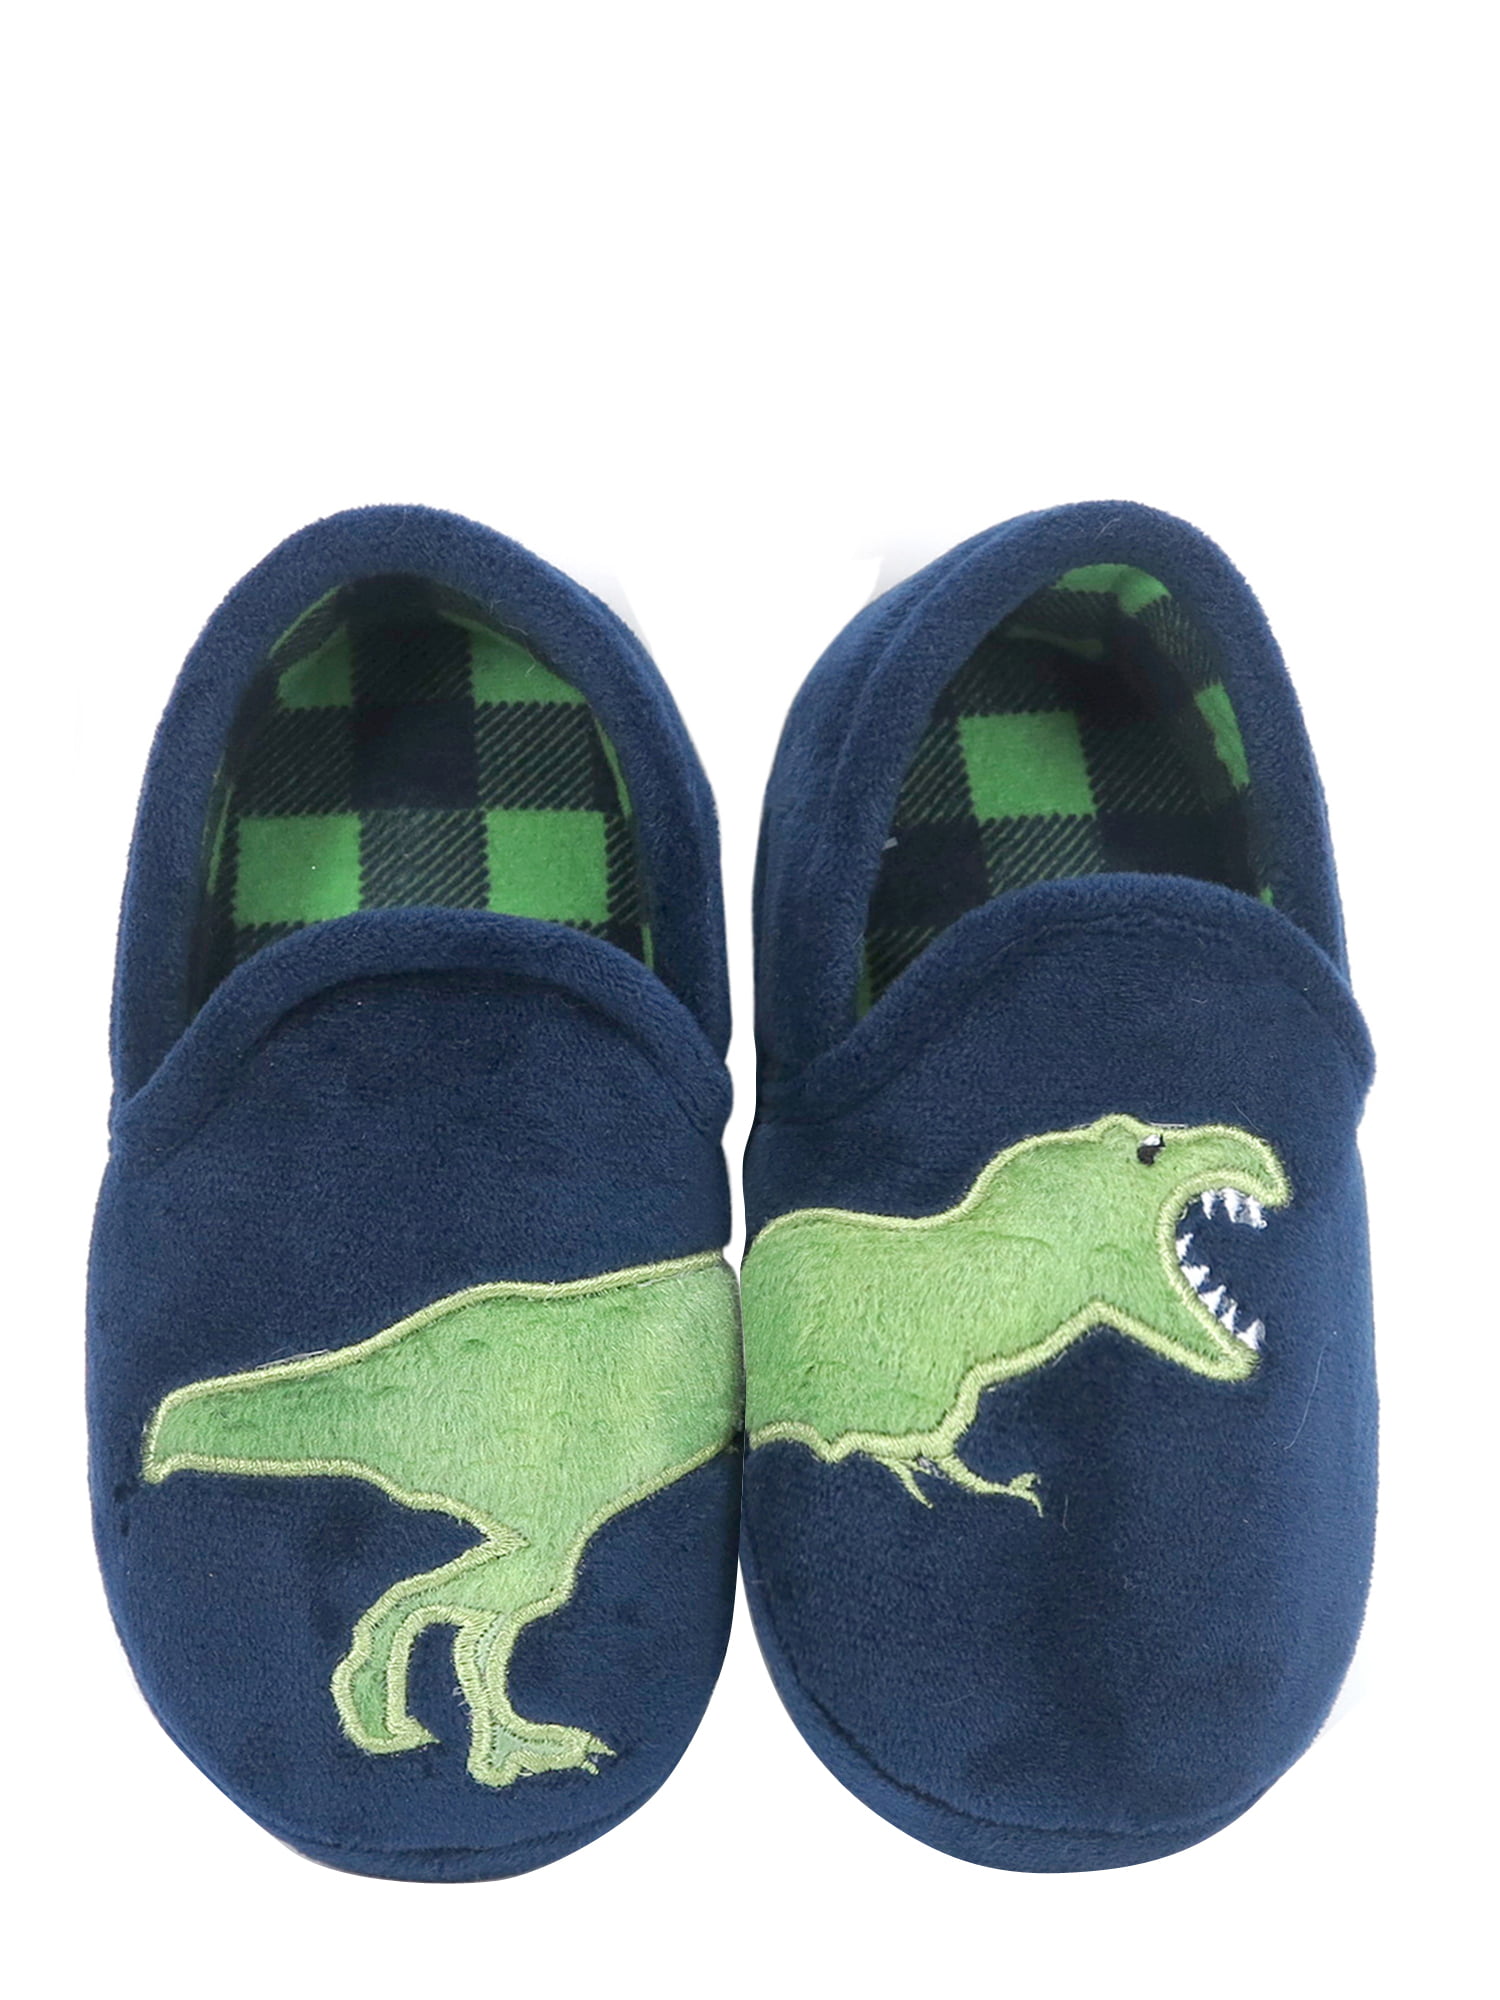 dinosaur feet slippers walmart